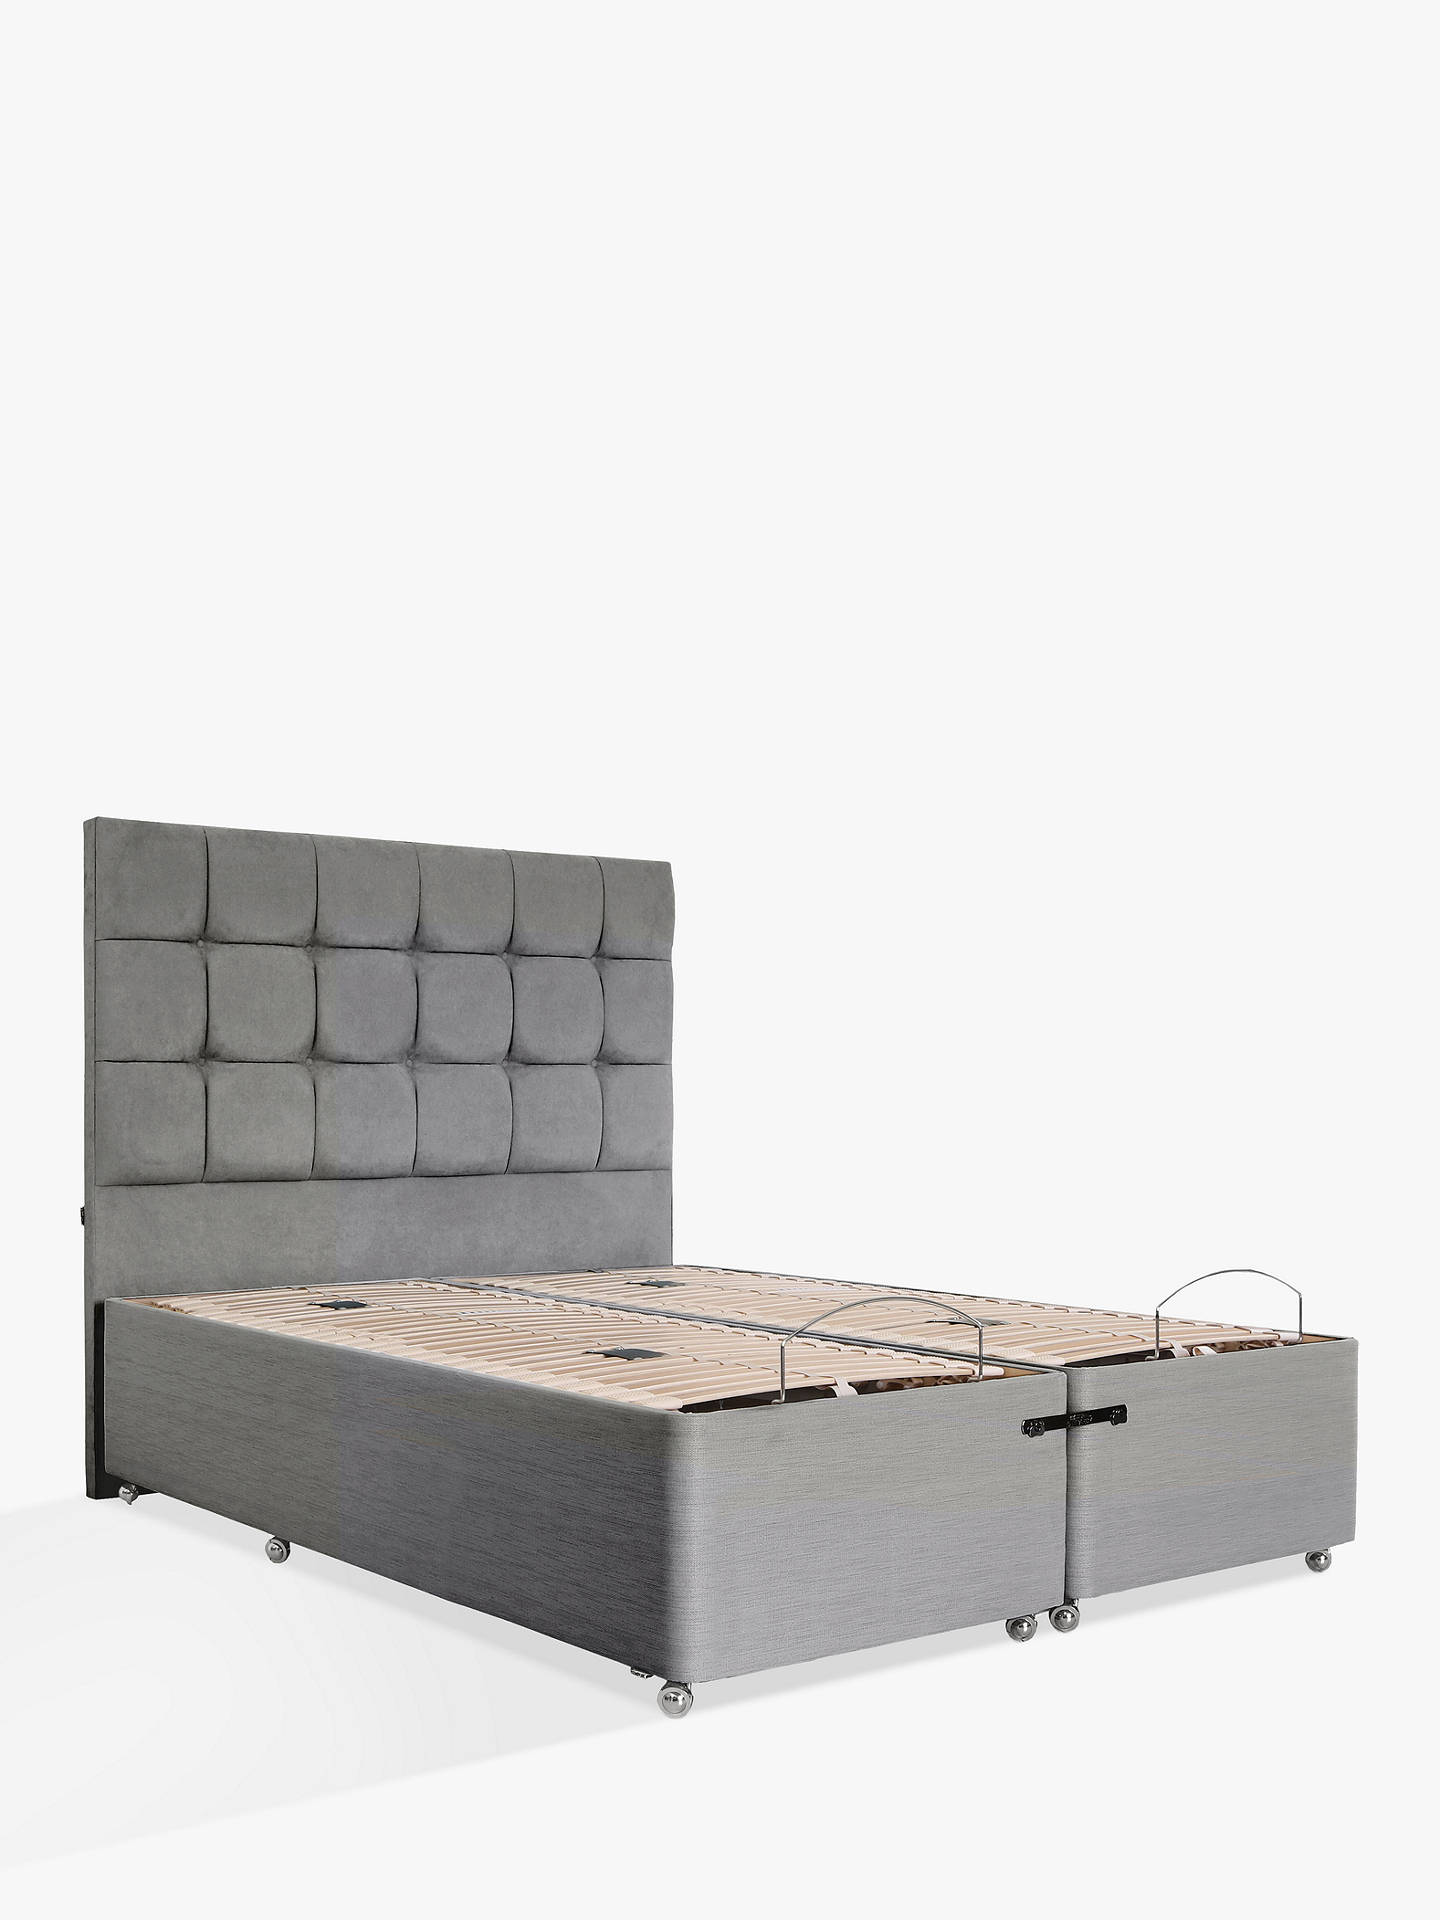 Tempur Adjustable Divan Bed, Super King Size at John Lewis & Partners